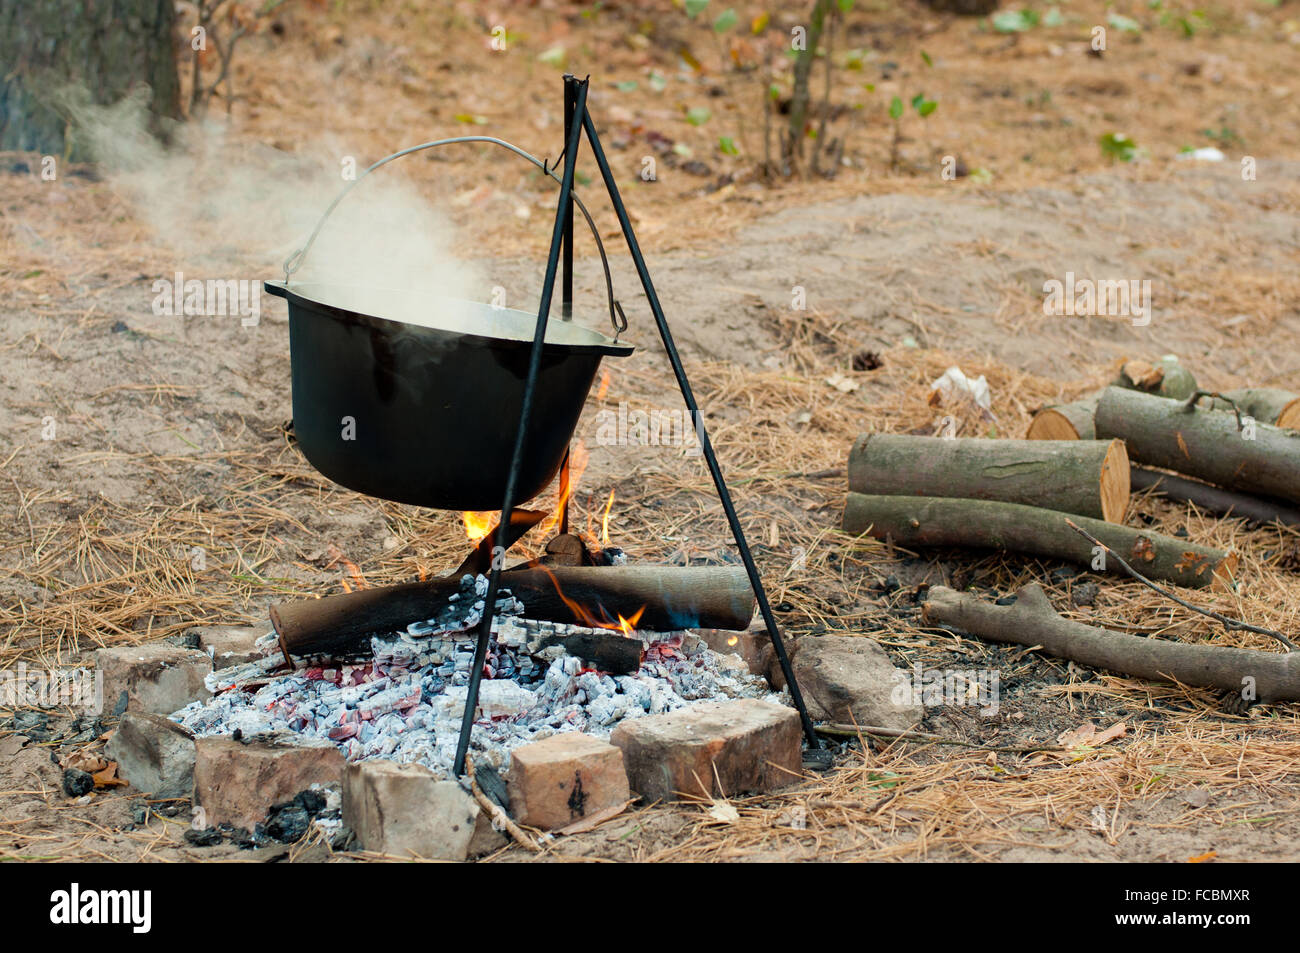 https://c8.alamy.com/comp/FCBMXR/cooking-porridge-in-black-pot-on-the-fire-in-forest-FCBMXR.jpg